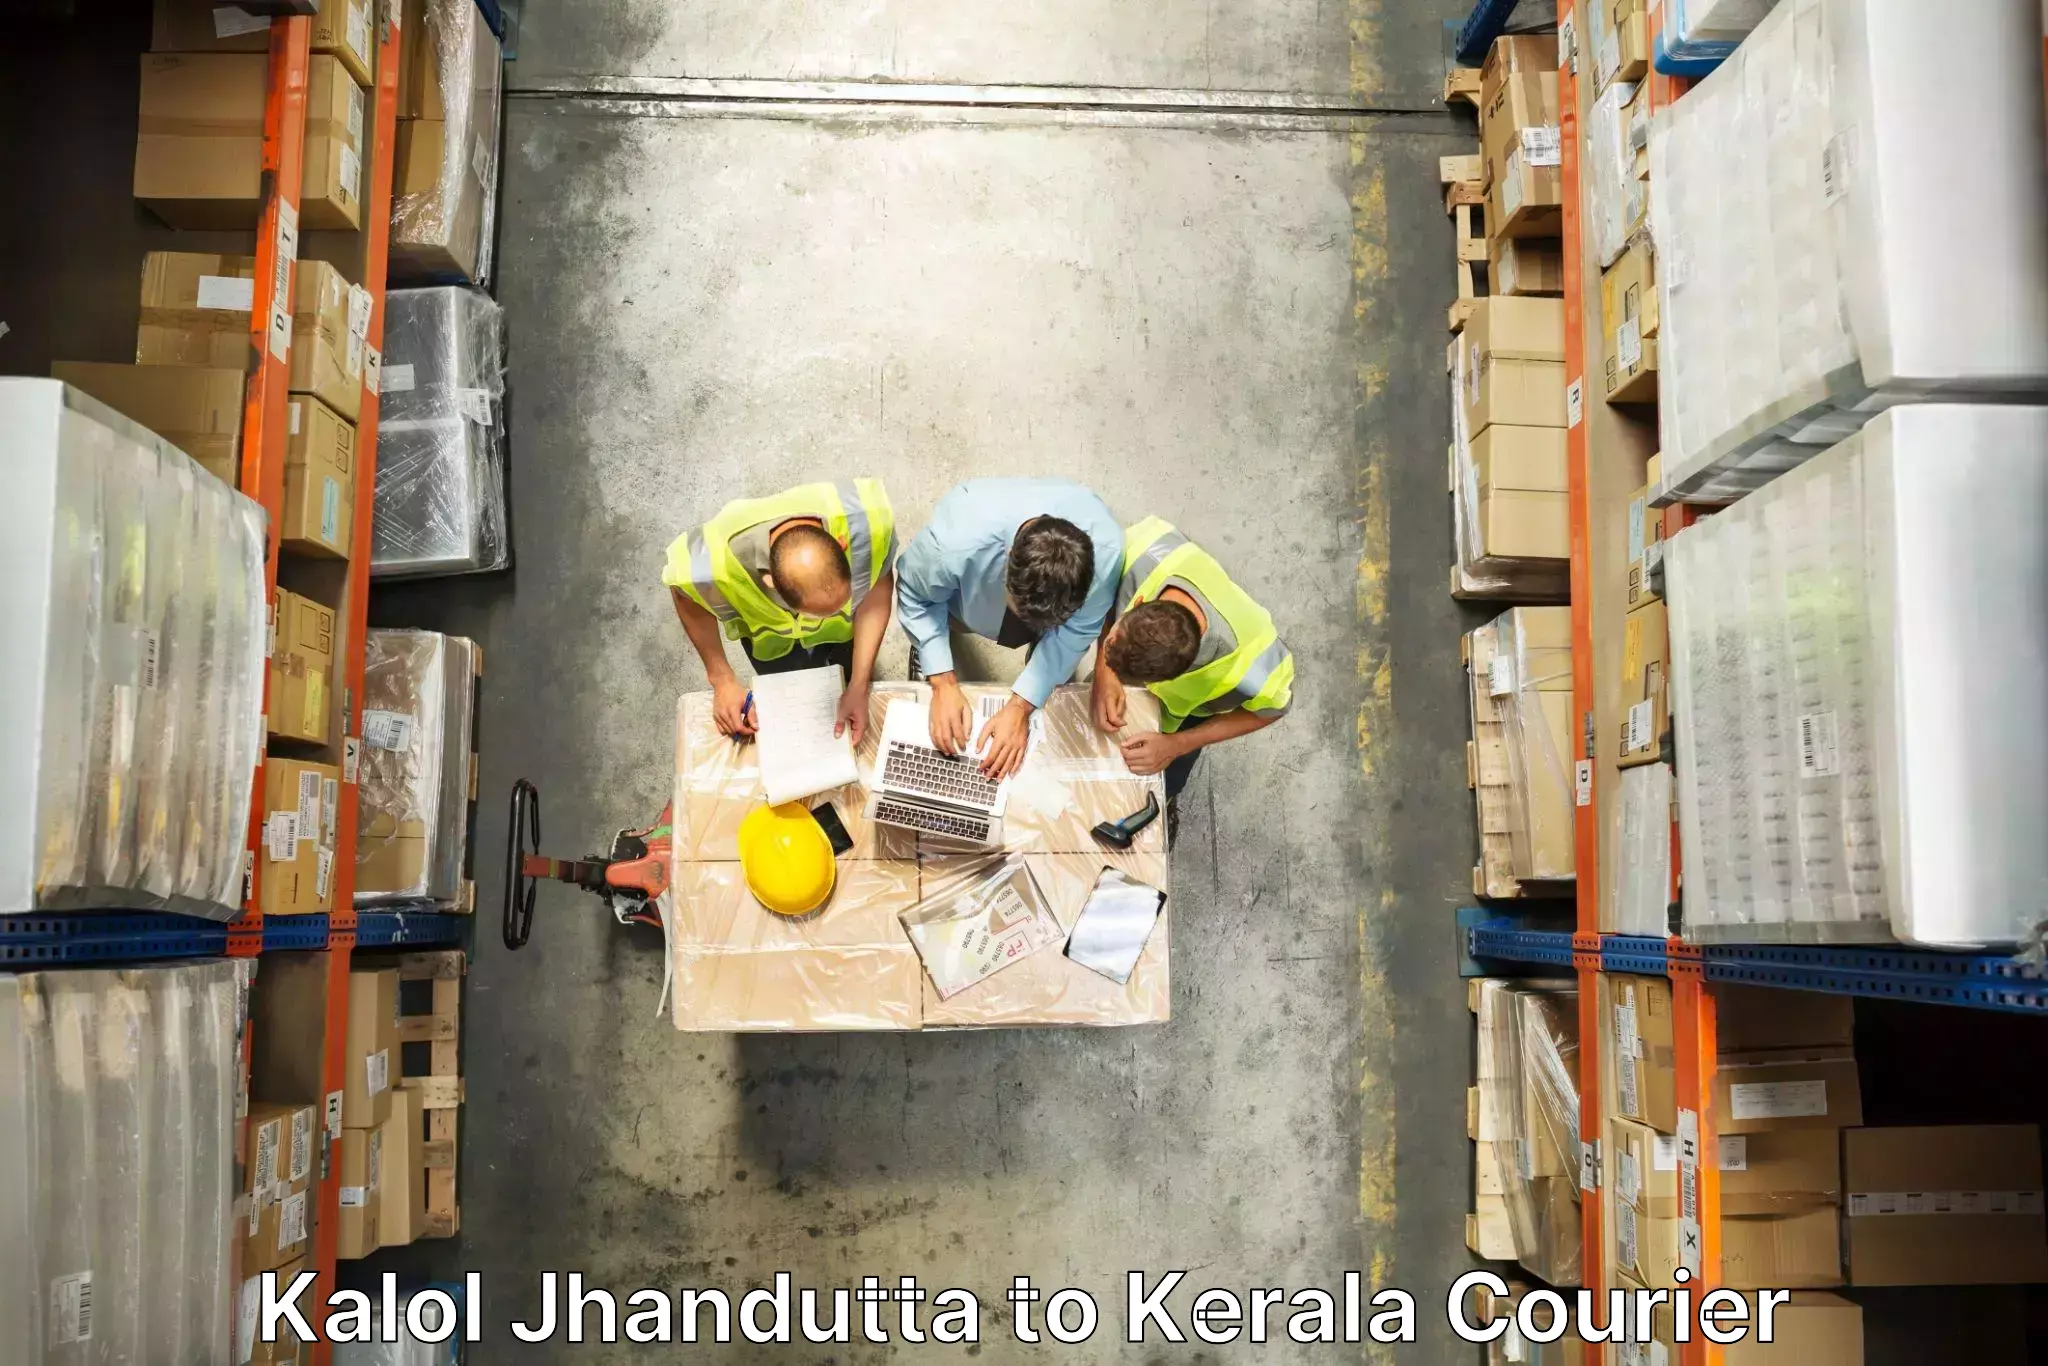 Reliable furniture transport Kalol Jhandutta to Kerala